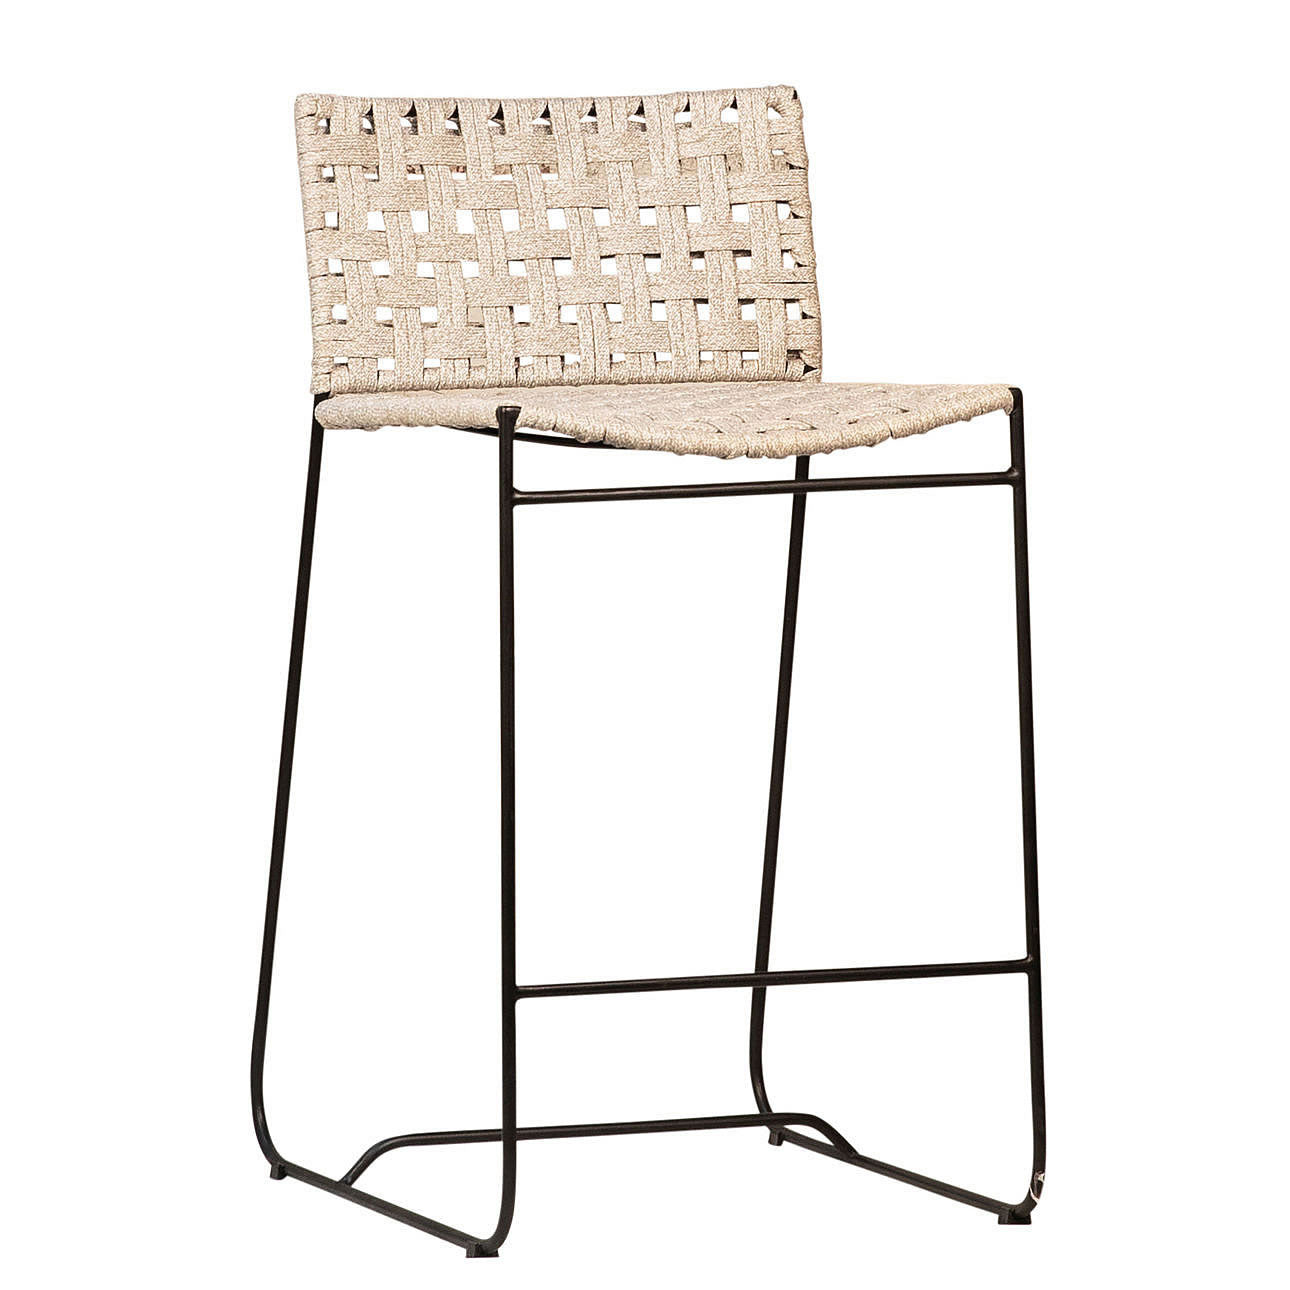 ezra-outdoor-counter-stools-in-natural-rope-black-powder-coated-legs-pair